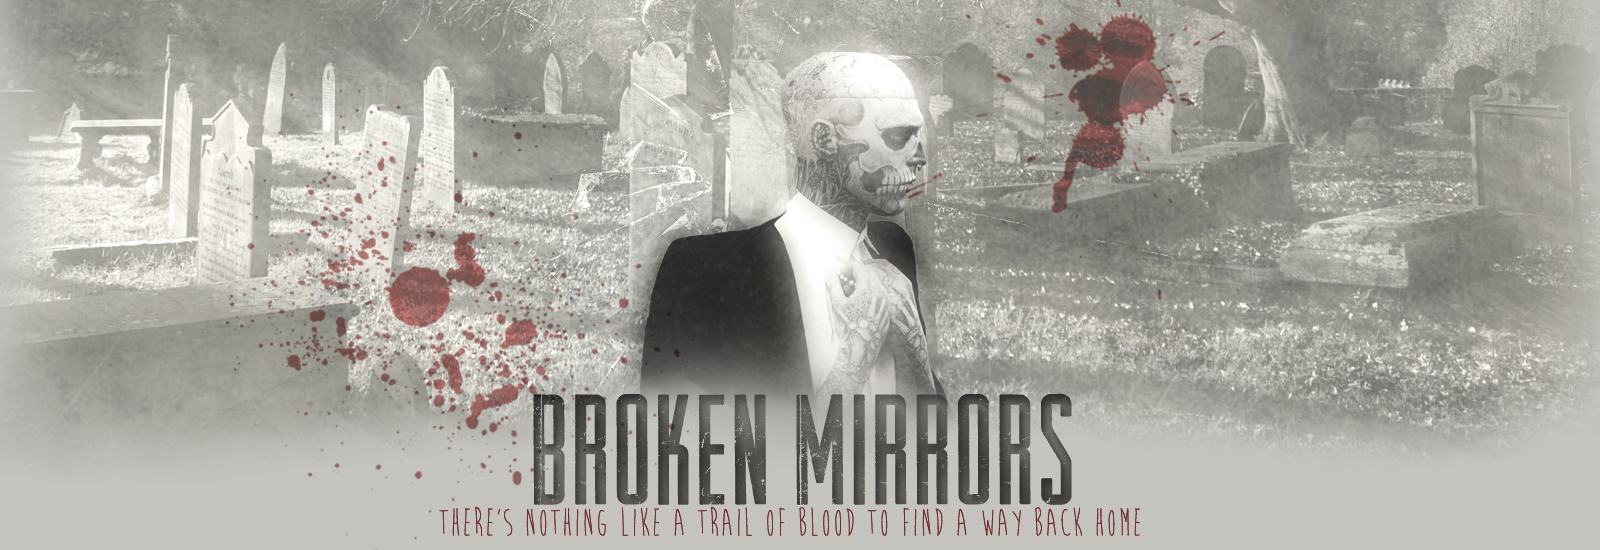 — Broken mirrors 15011708464018526512884151